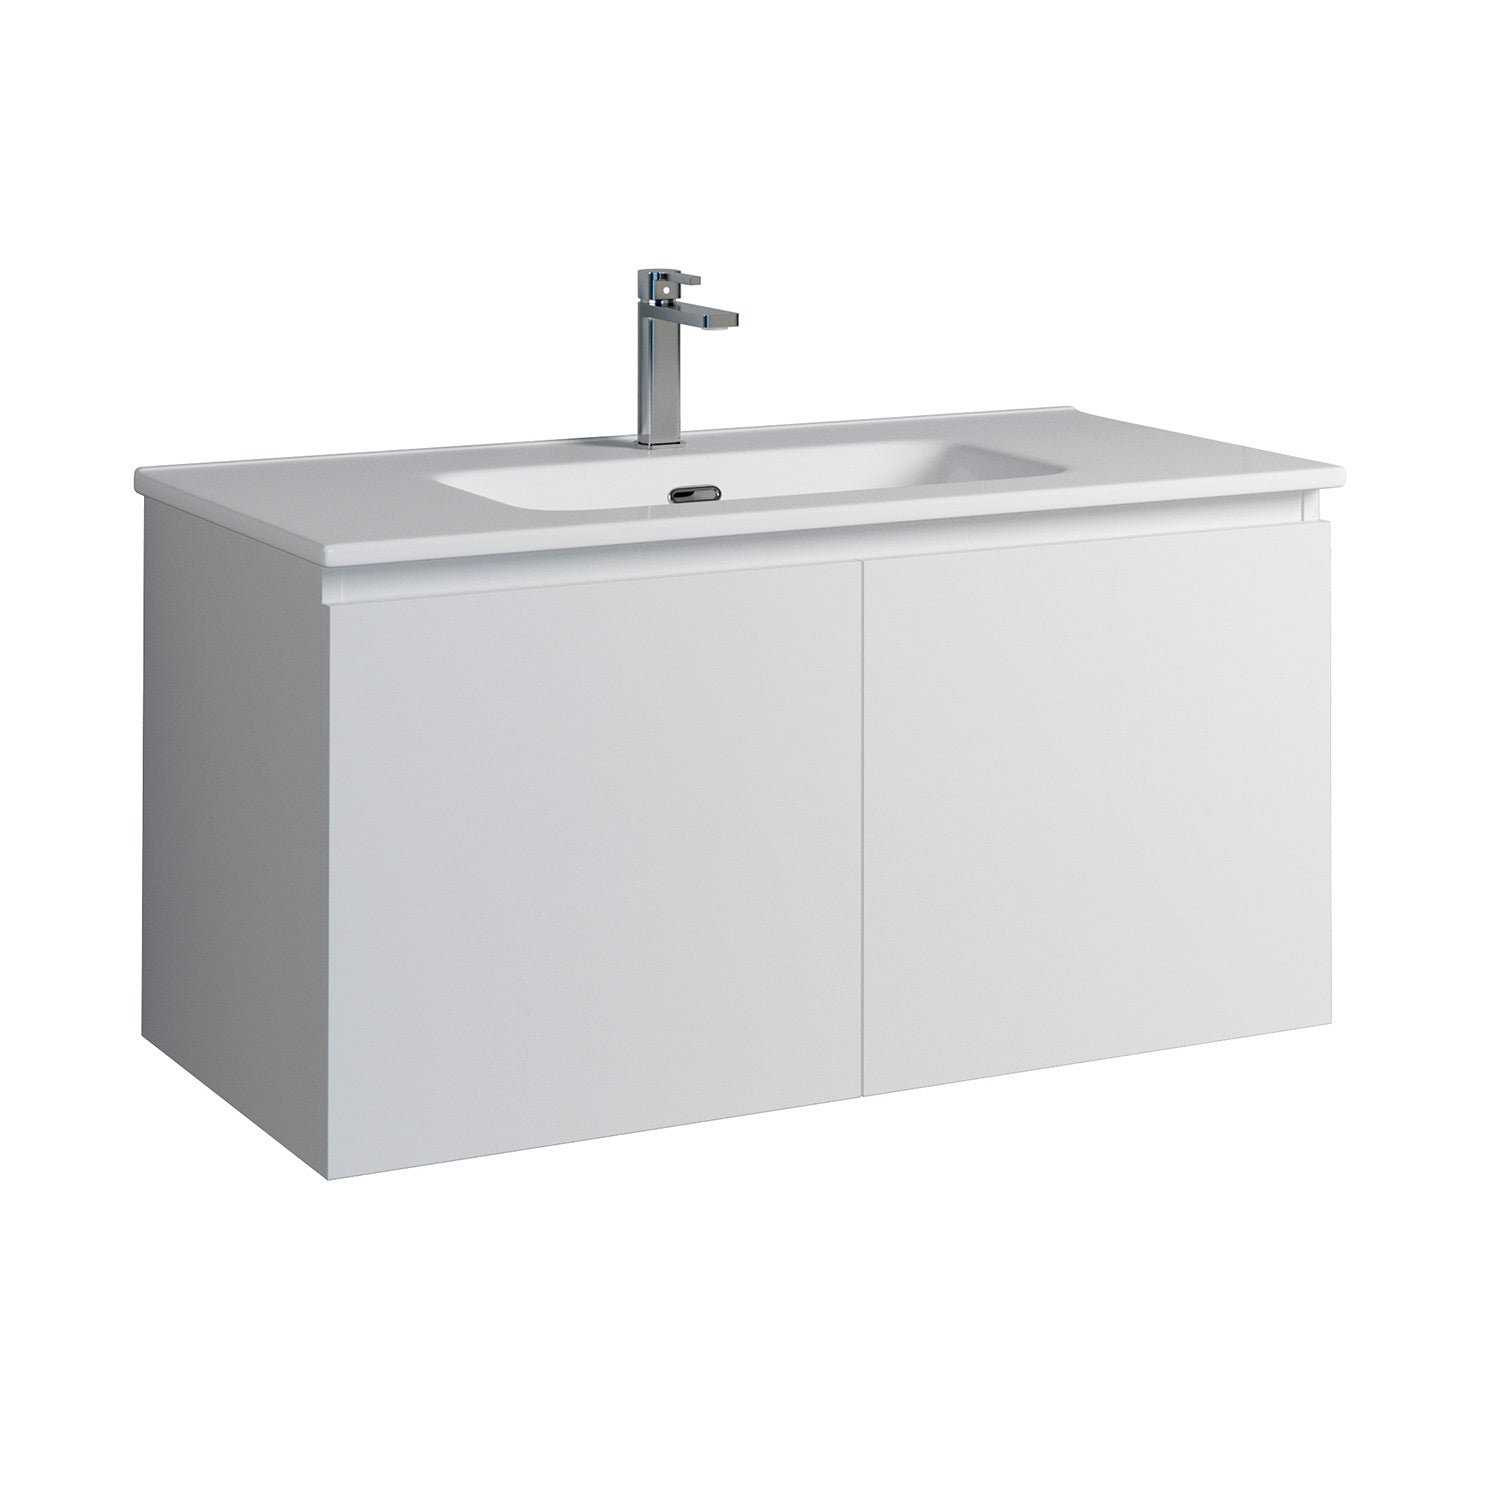 DAX Malibu Single Vanity Cabinet with Ceramic Basin Included